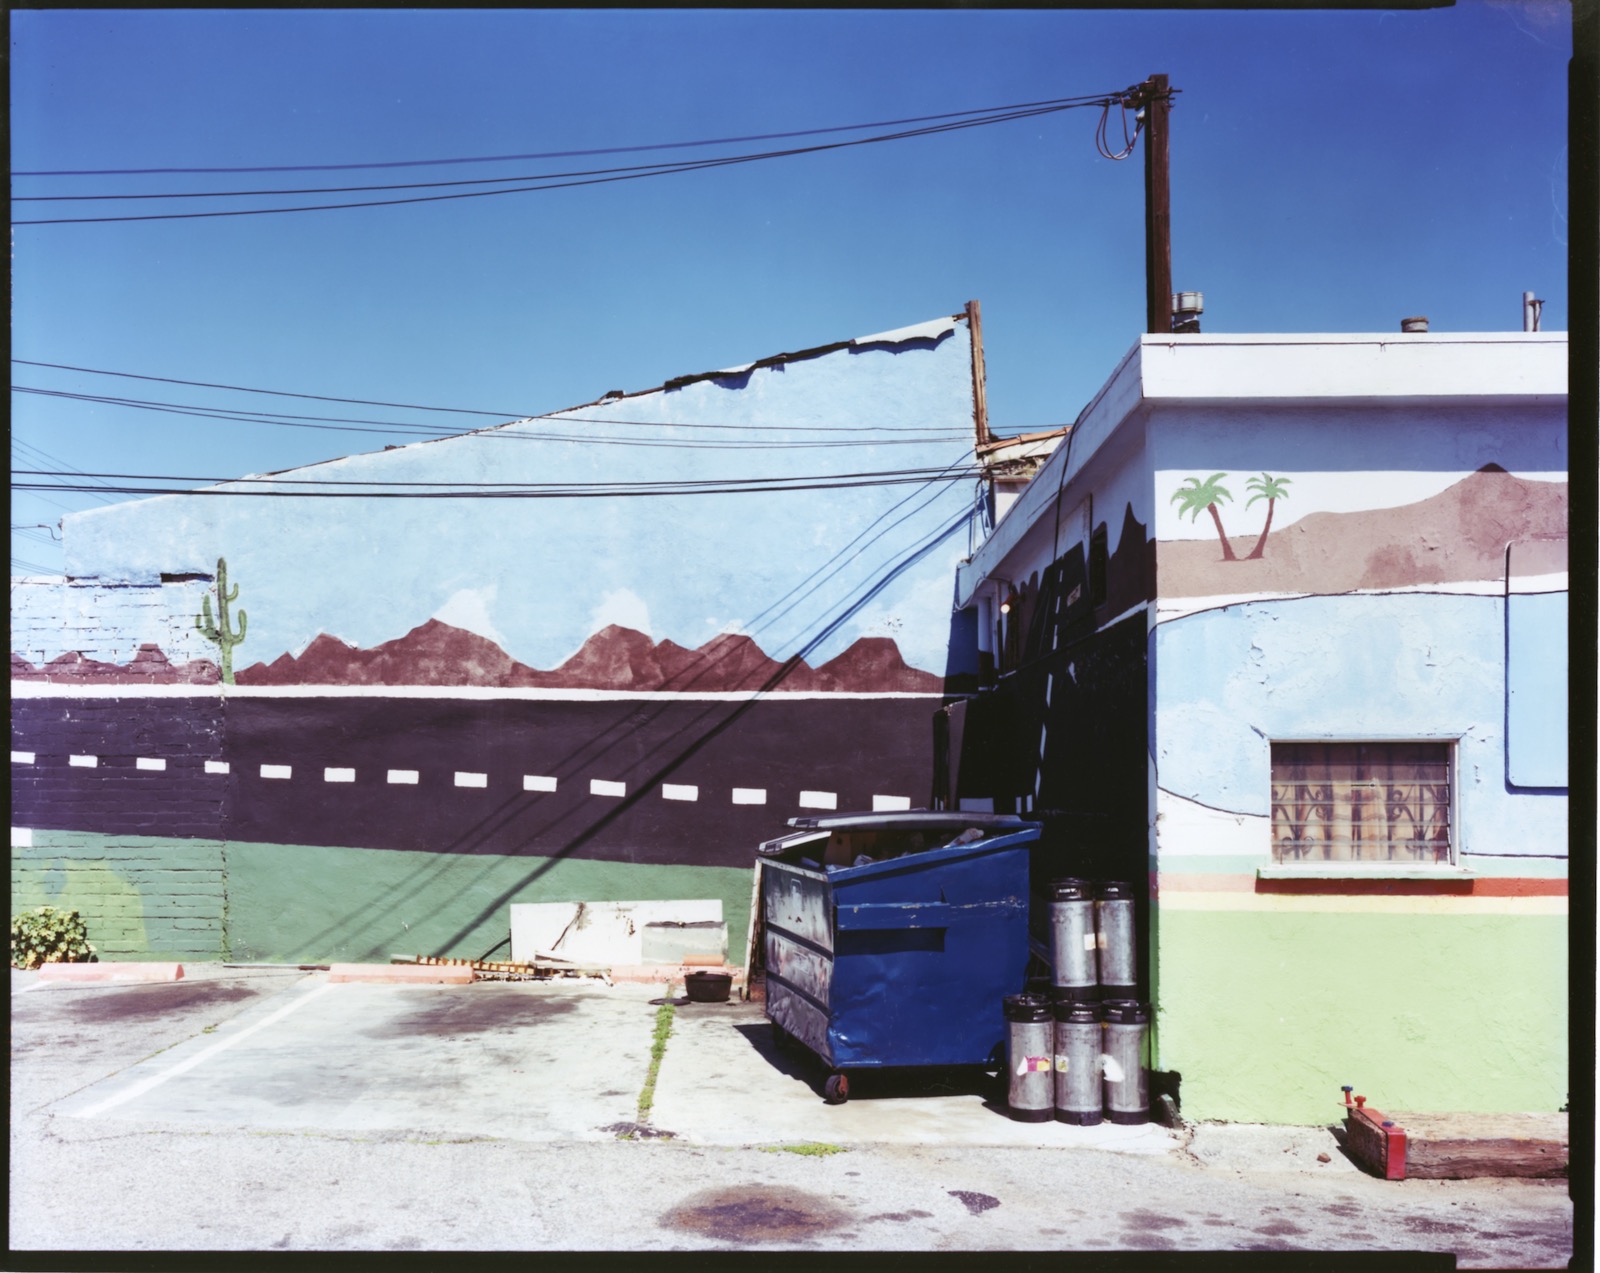 Vicinity of Palm Springs, CA, c. 1984